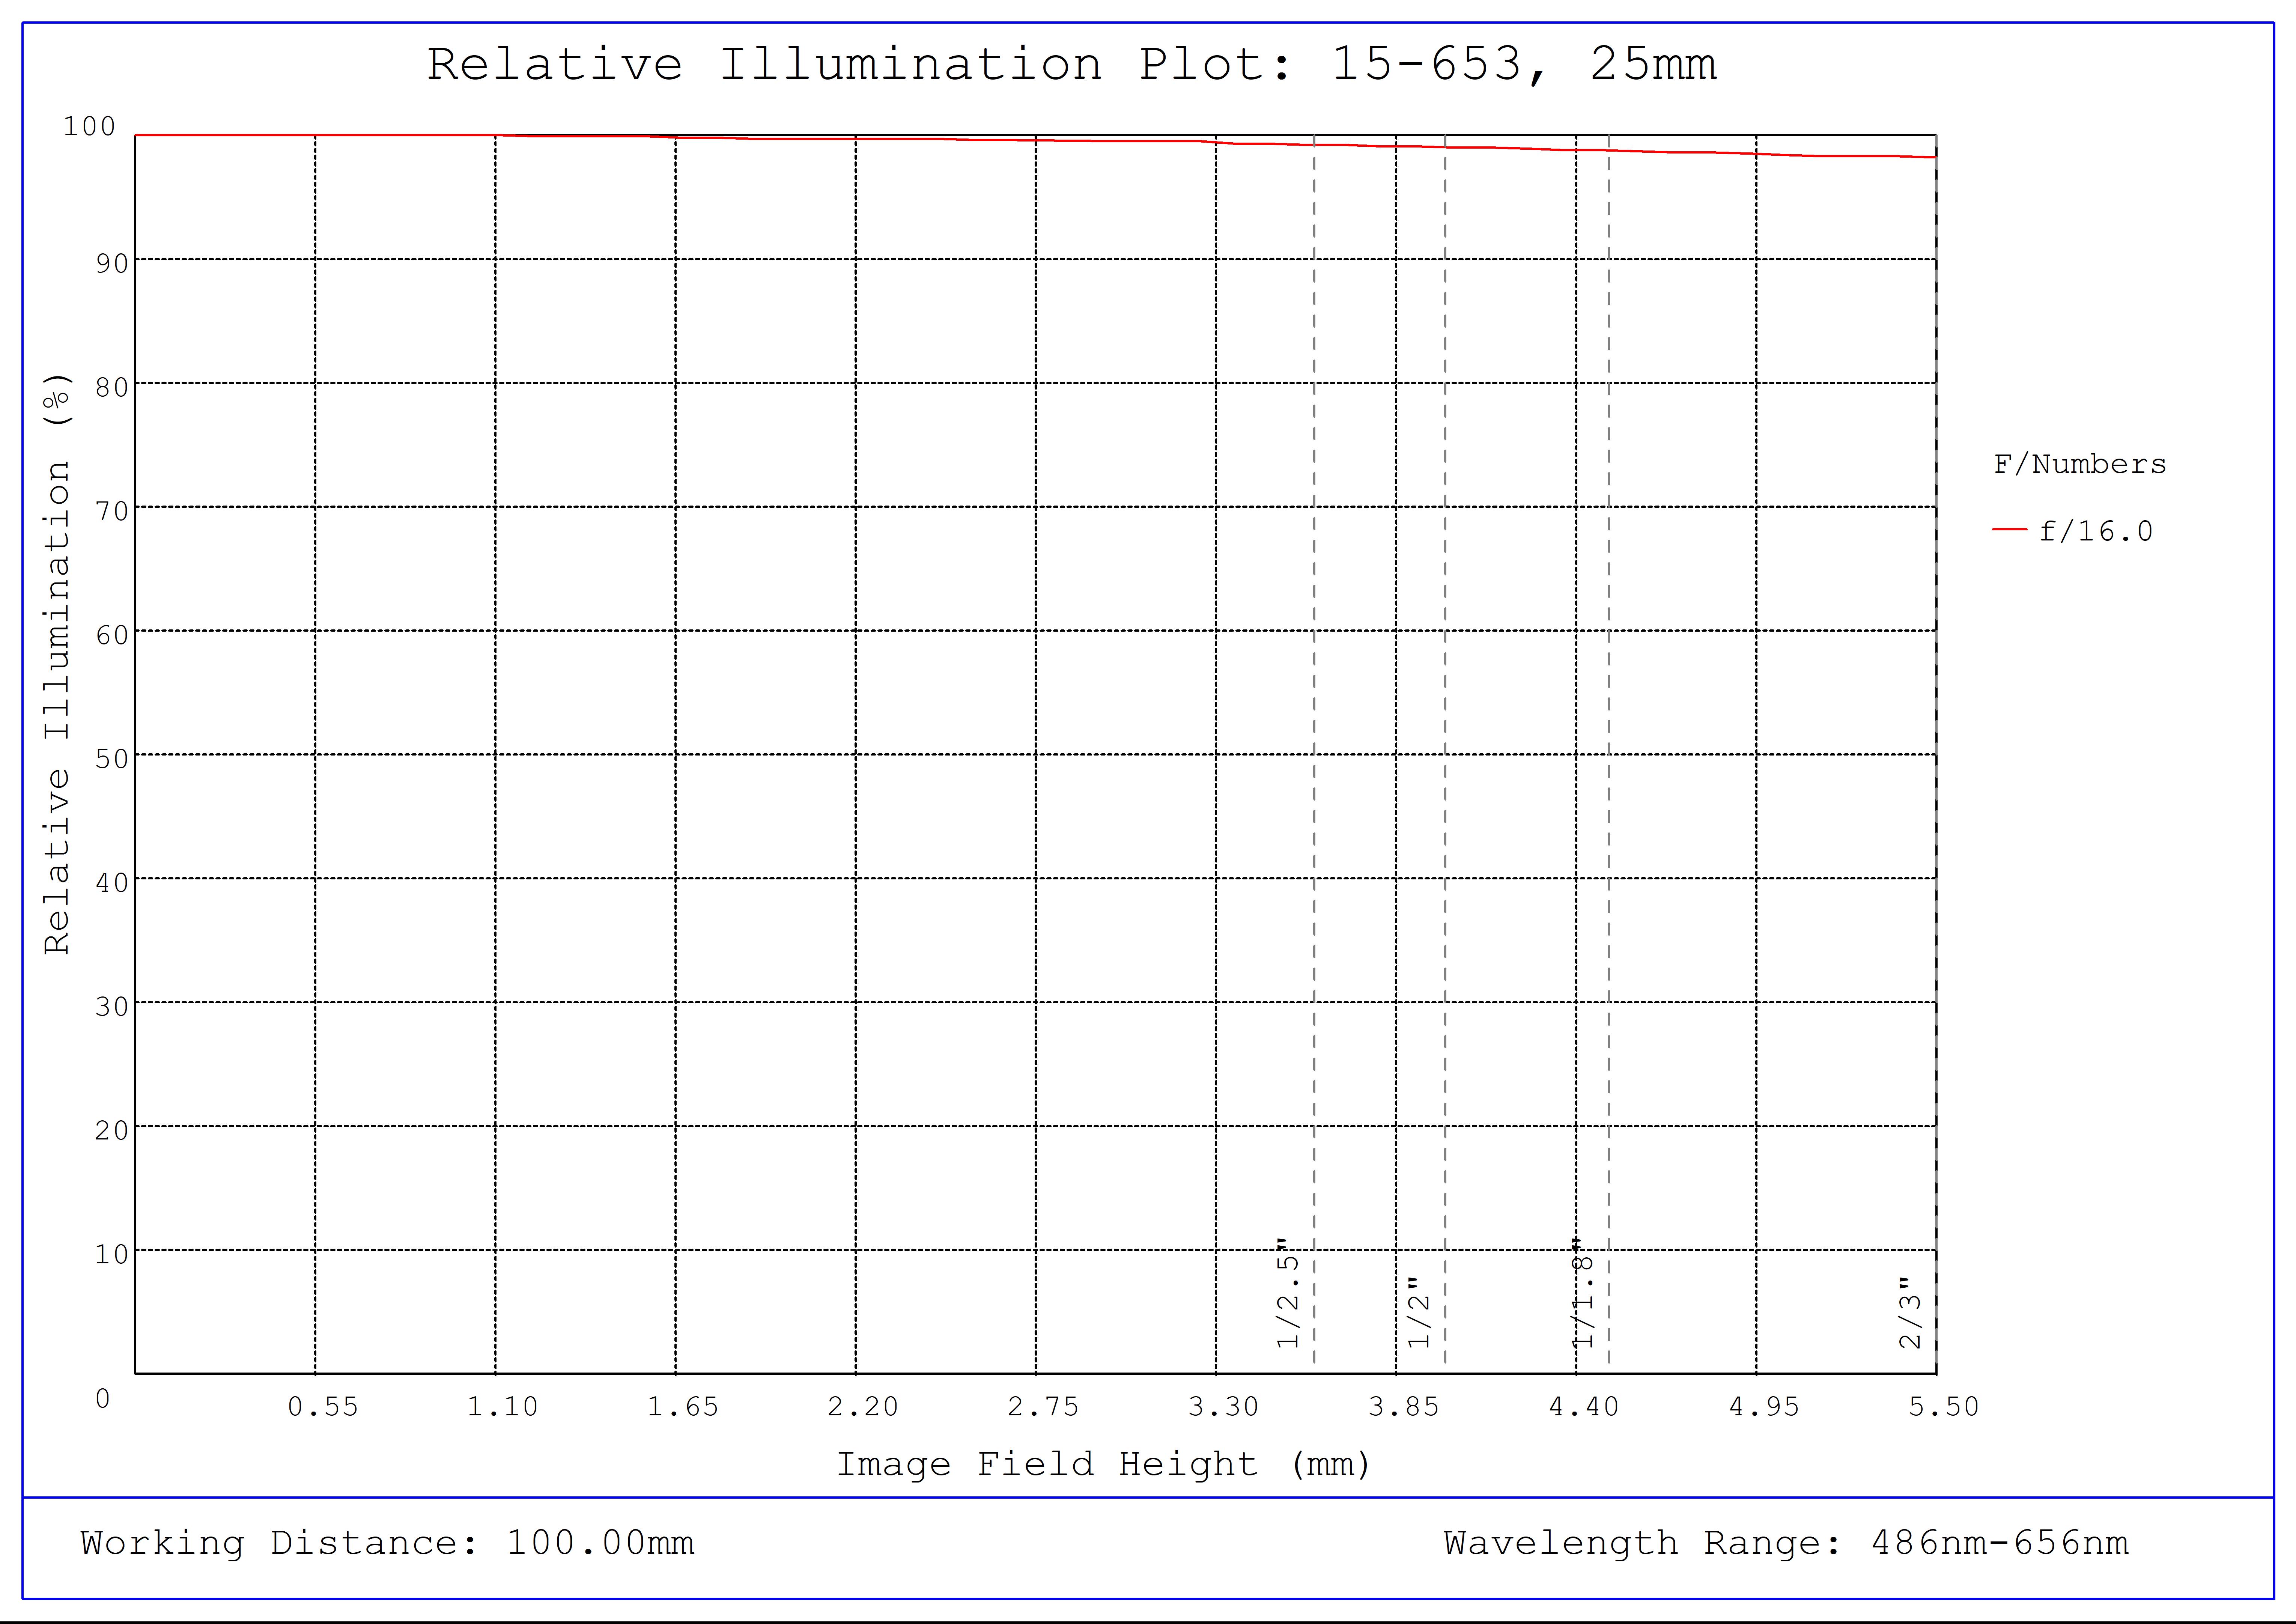 #15-653, 25mm, f/16 Cw Series Fixed Focal Length Lens, Relative Illumination Plot